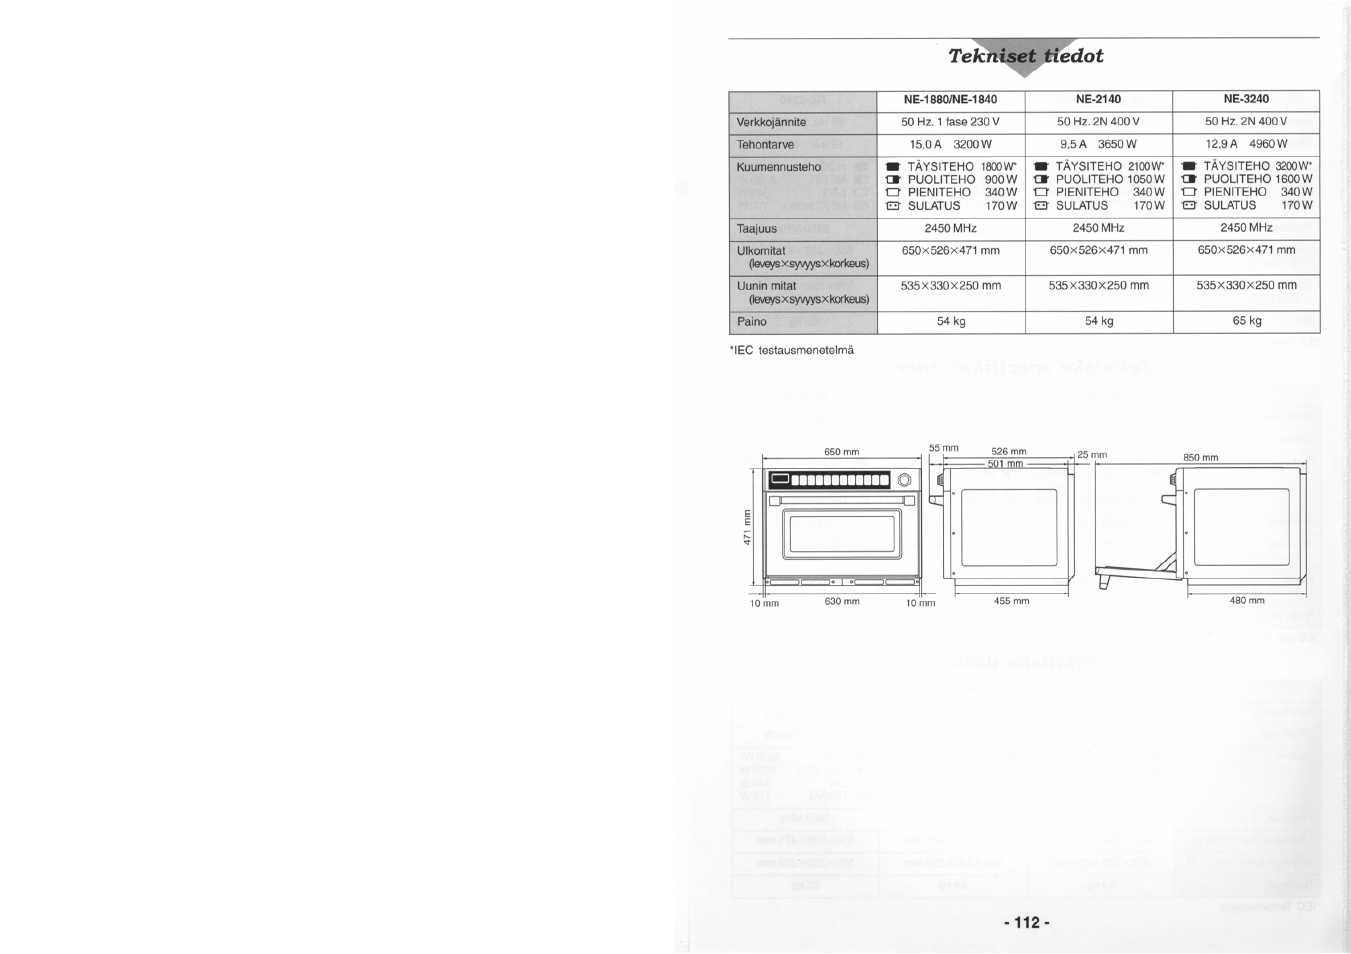 Текìchiset^ftec edot | Panasonic NE1880 Manuel d'utilisation | Page 16 / 18